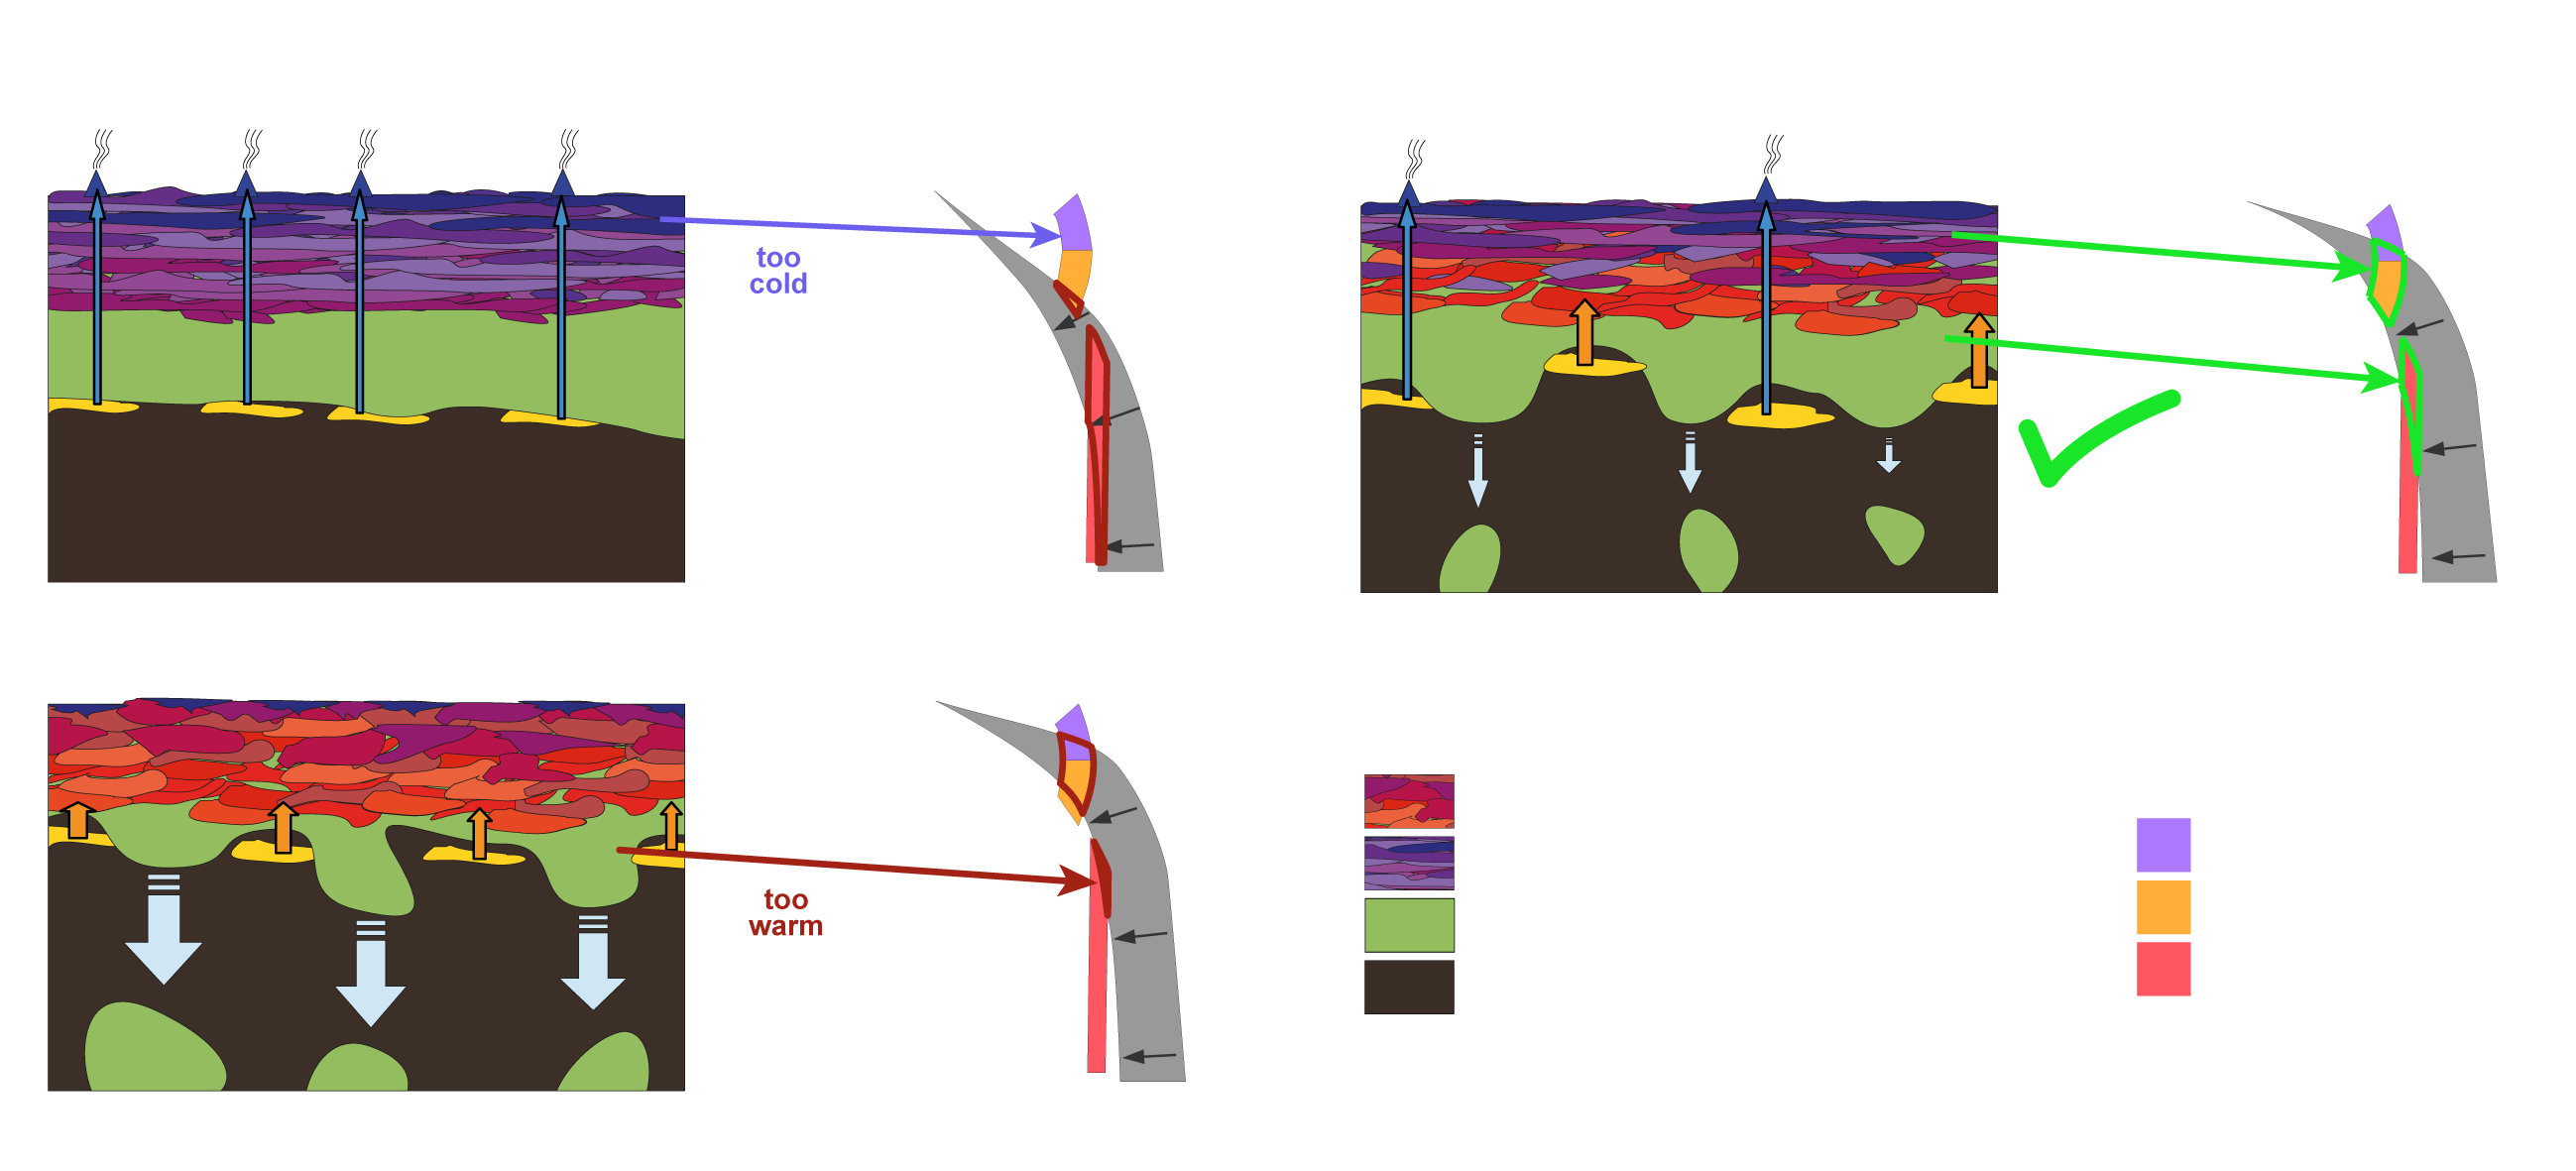 Plutonism vs Volcanism